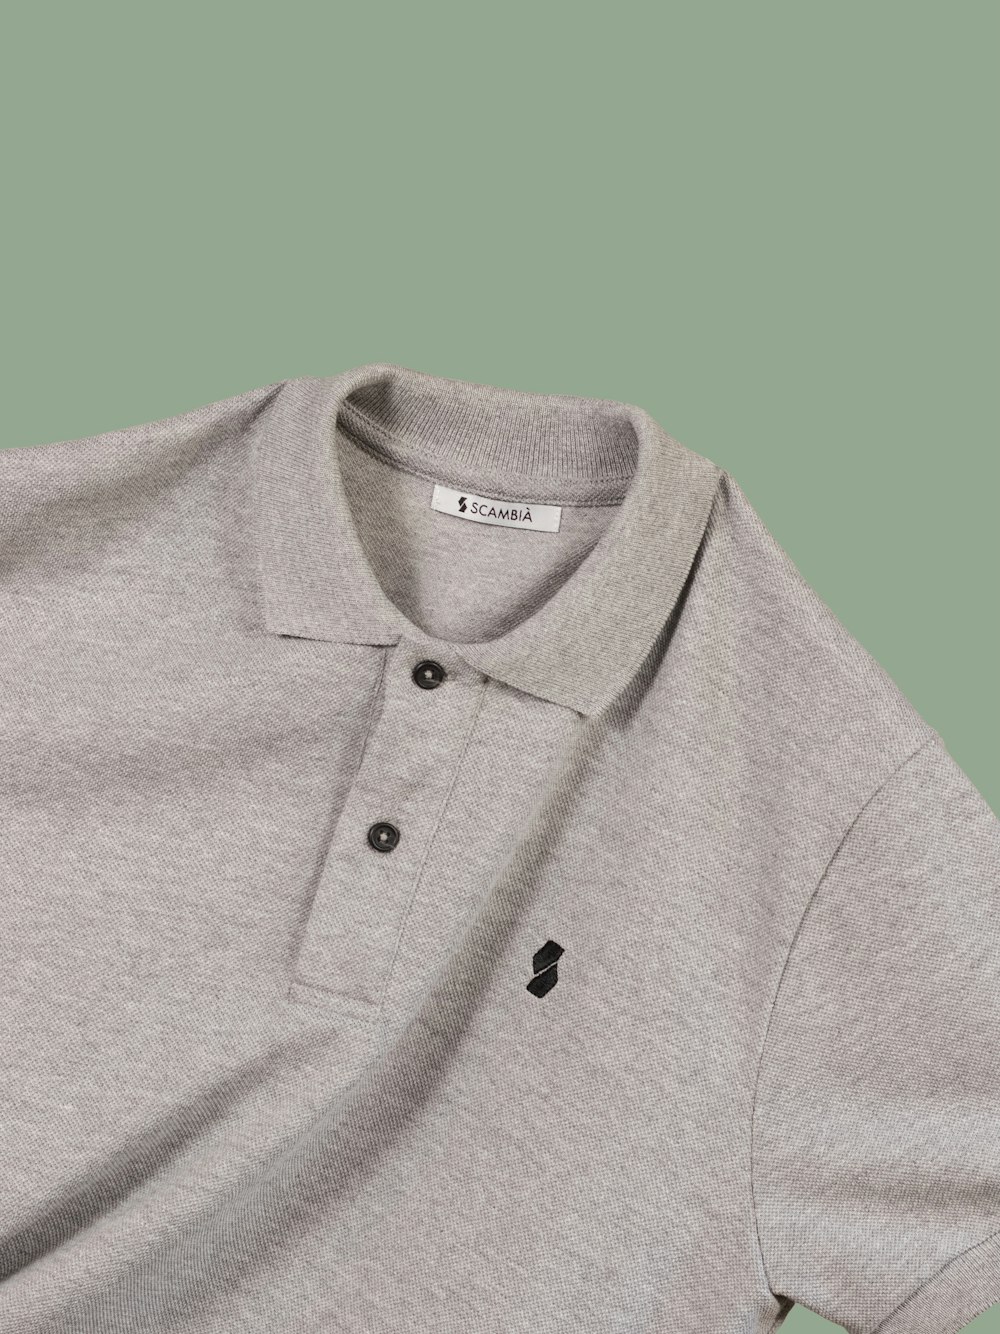 gray polo shirt on blue textile